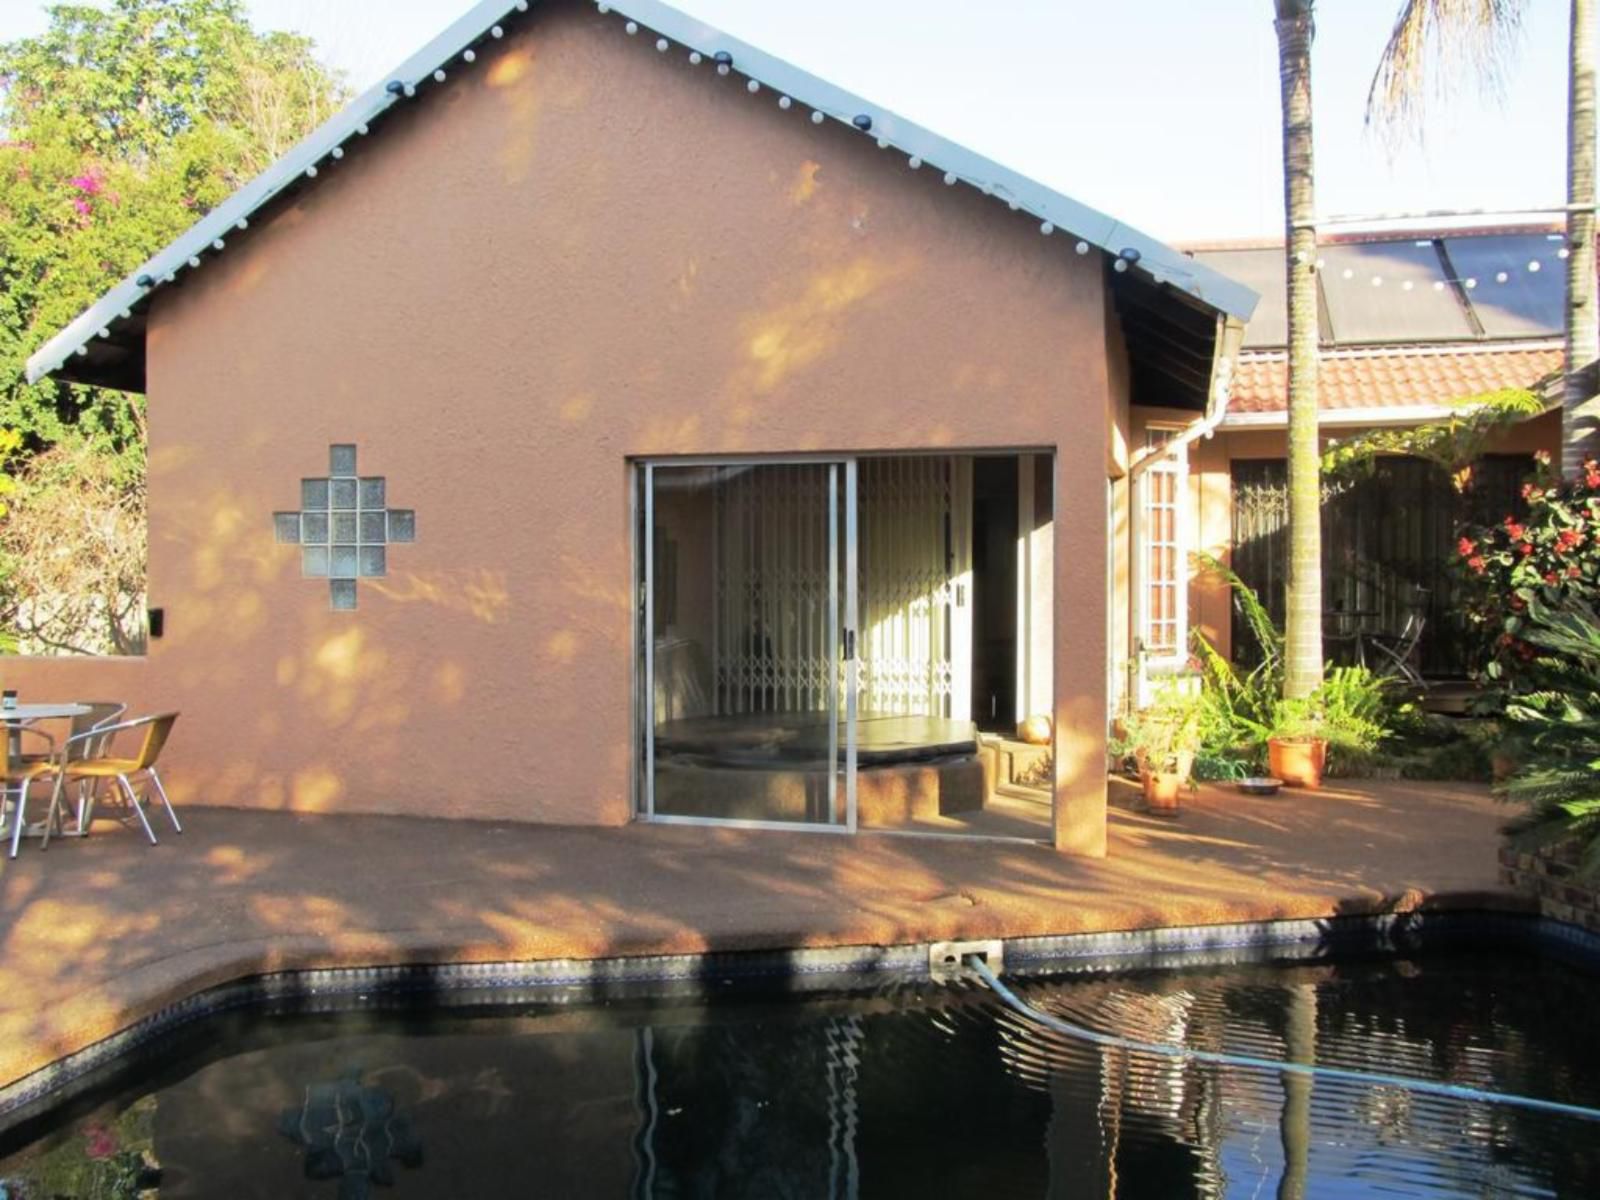 Whara Whara Guesthouse Randpark Ridge Johannesburg Gauteng South Africa House, Building, Architecture, Swimming Pool